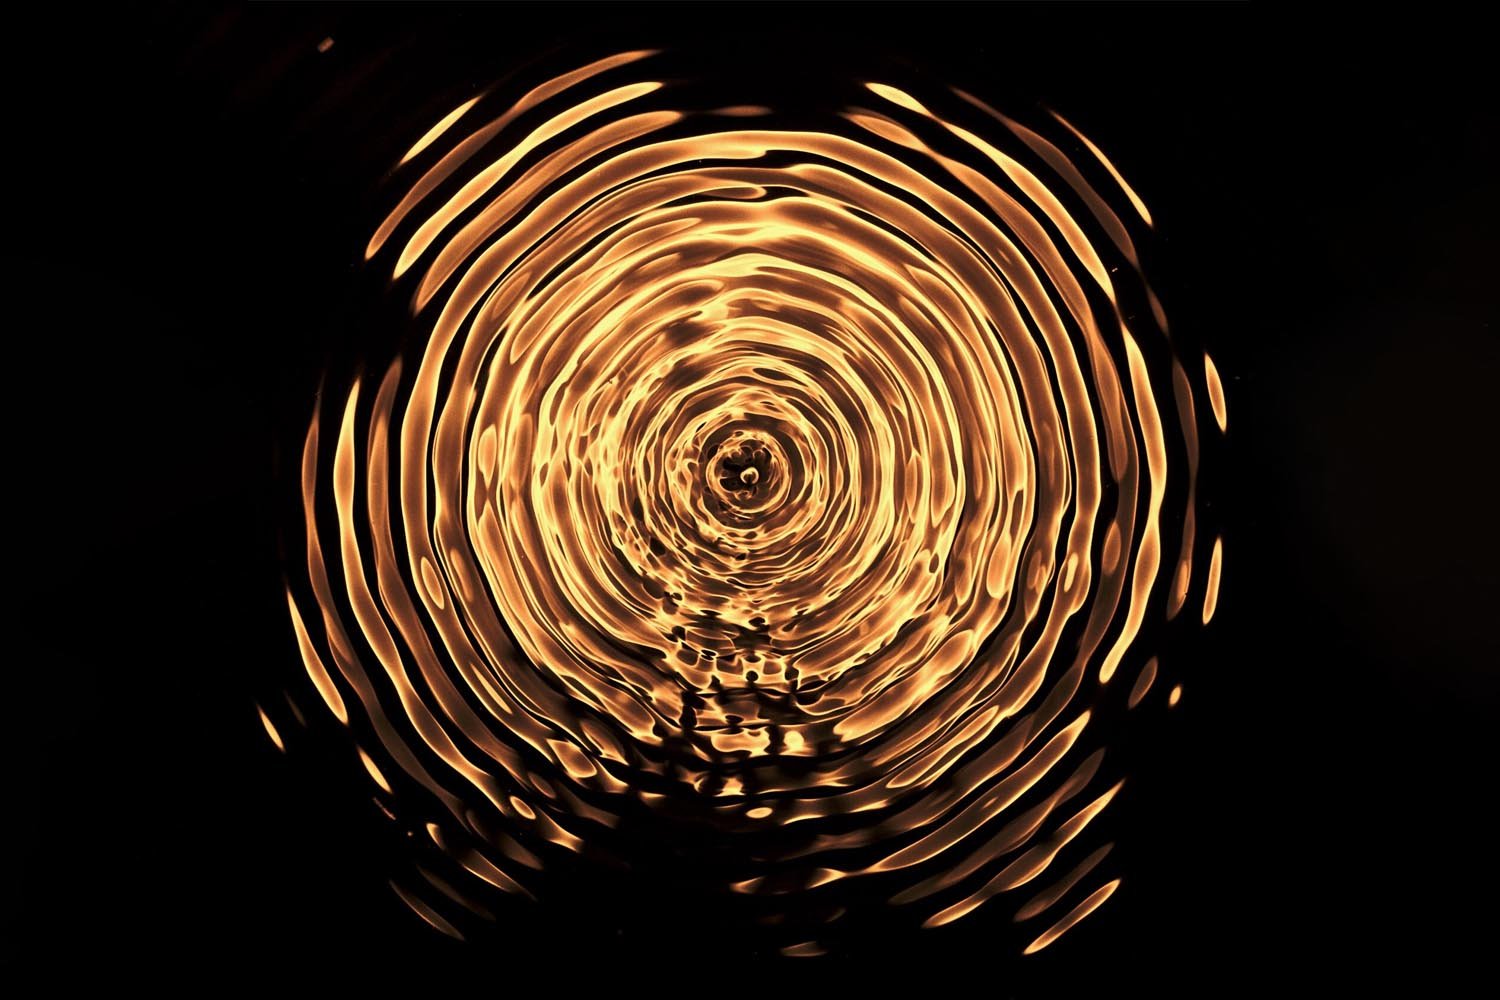 Cymatics on water